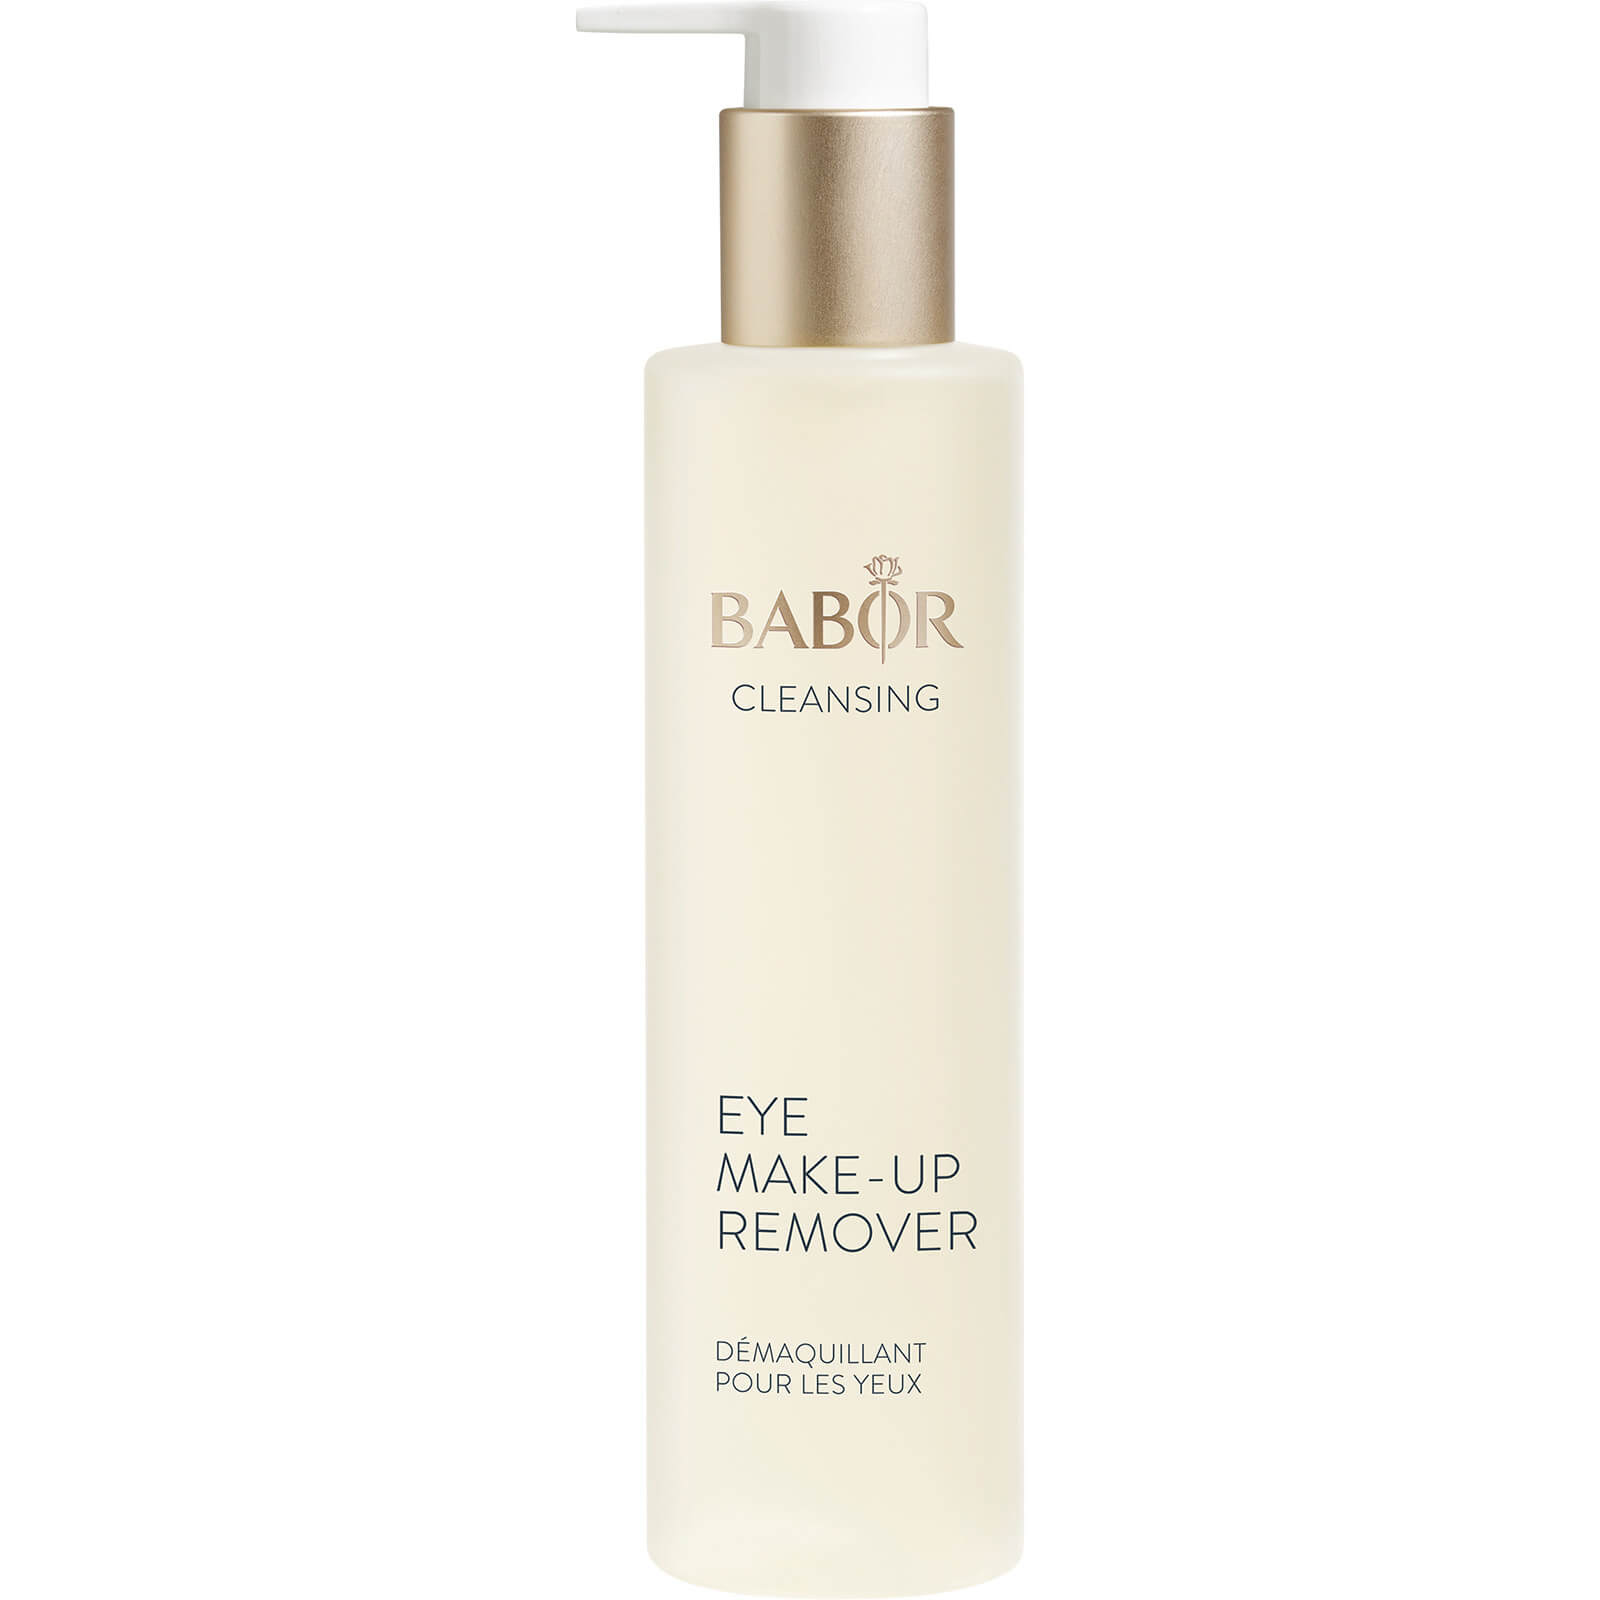 BABOR Cleansing Eye Make-Up Remover 100ml lookfantastic.com imagine